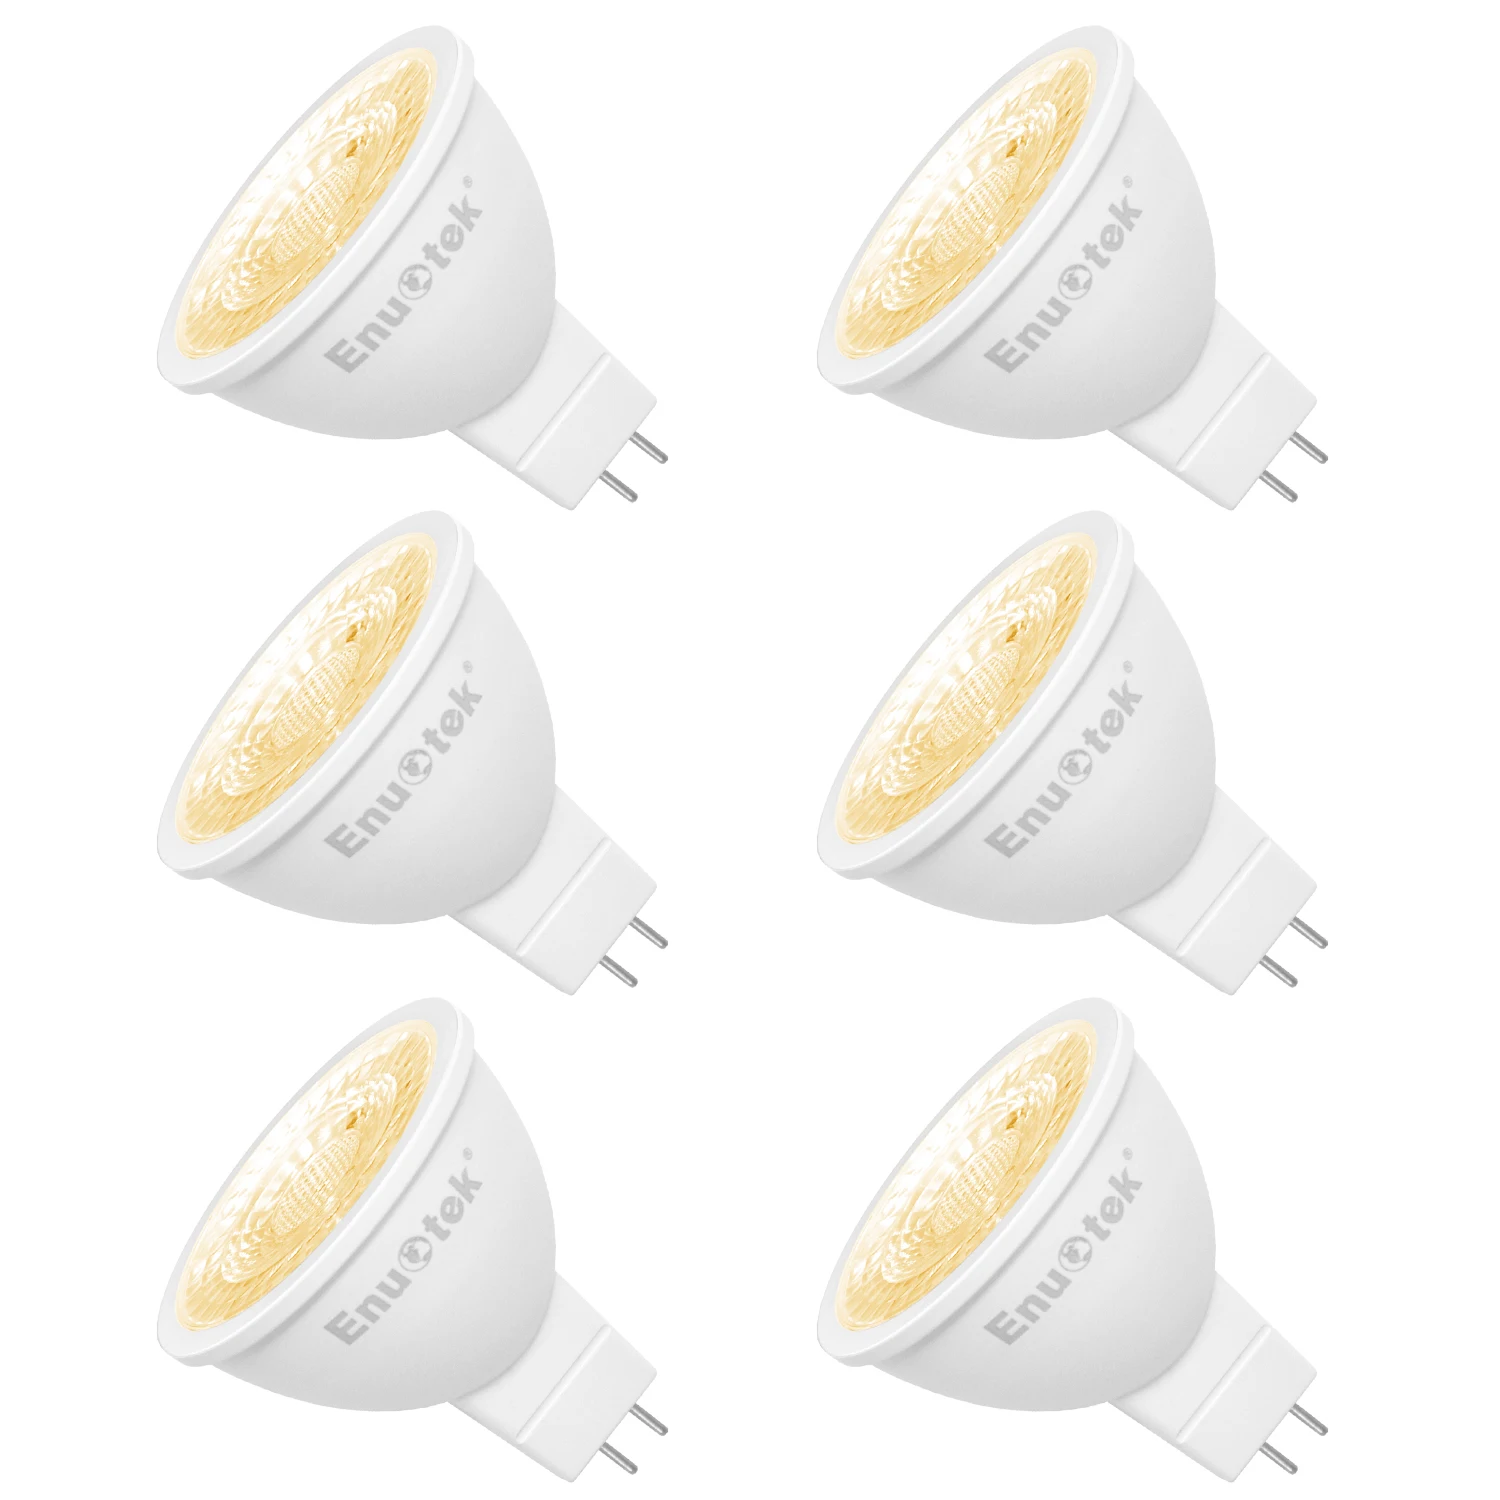 

LED MR16 12V Spot Light Bulbs 7W 650Lm 38 Degree Warm White 3000K GU5.3 Bi-Pin Base Not Dimmable Replace 60W Halogen Lamp 6 Pack